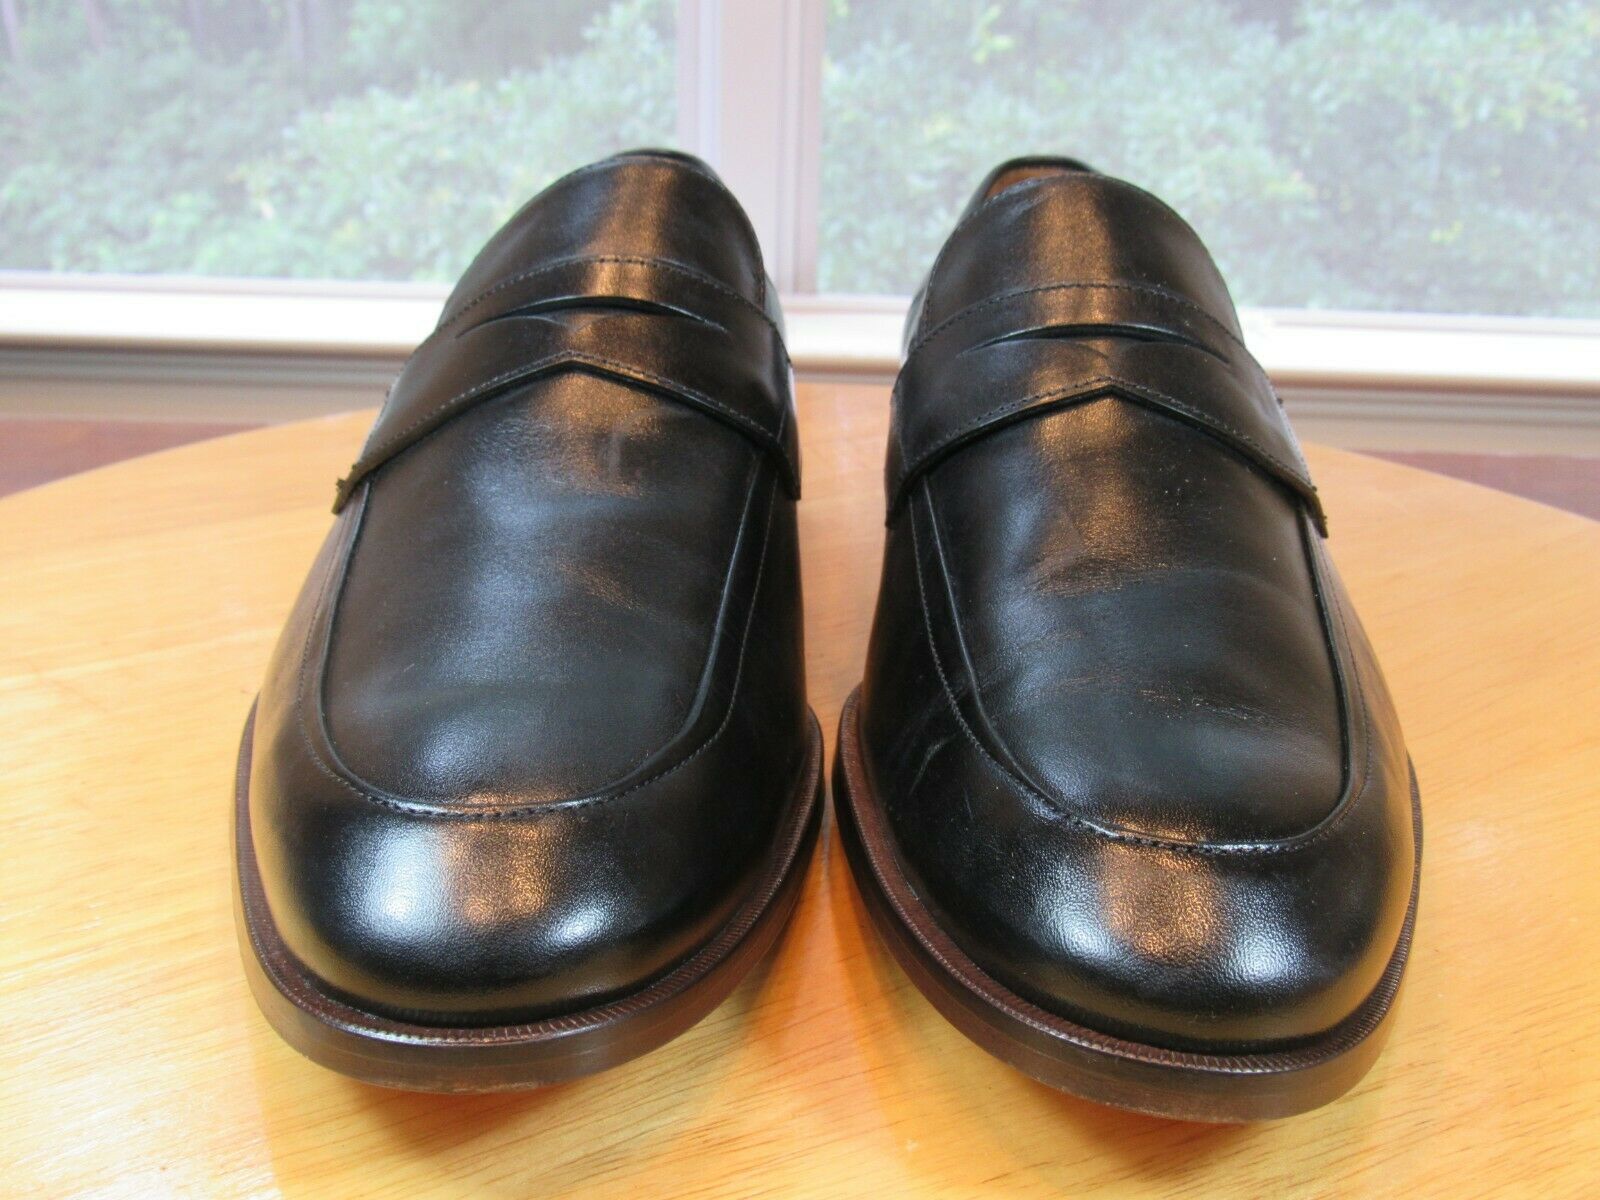 JOHNSTON & MURPHY Men's Loafers (59 2205) Black Leather Dress Shoes SIZE 13